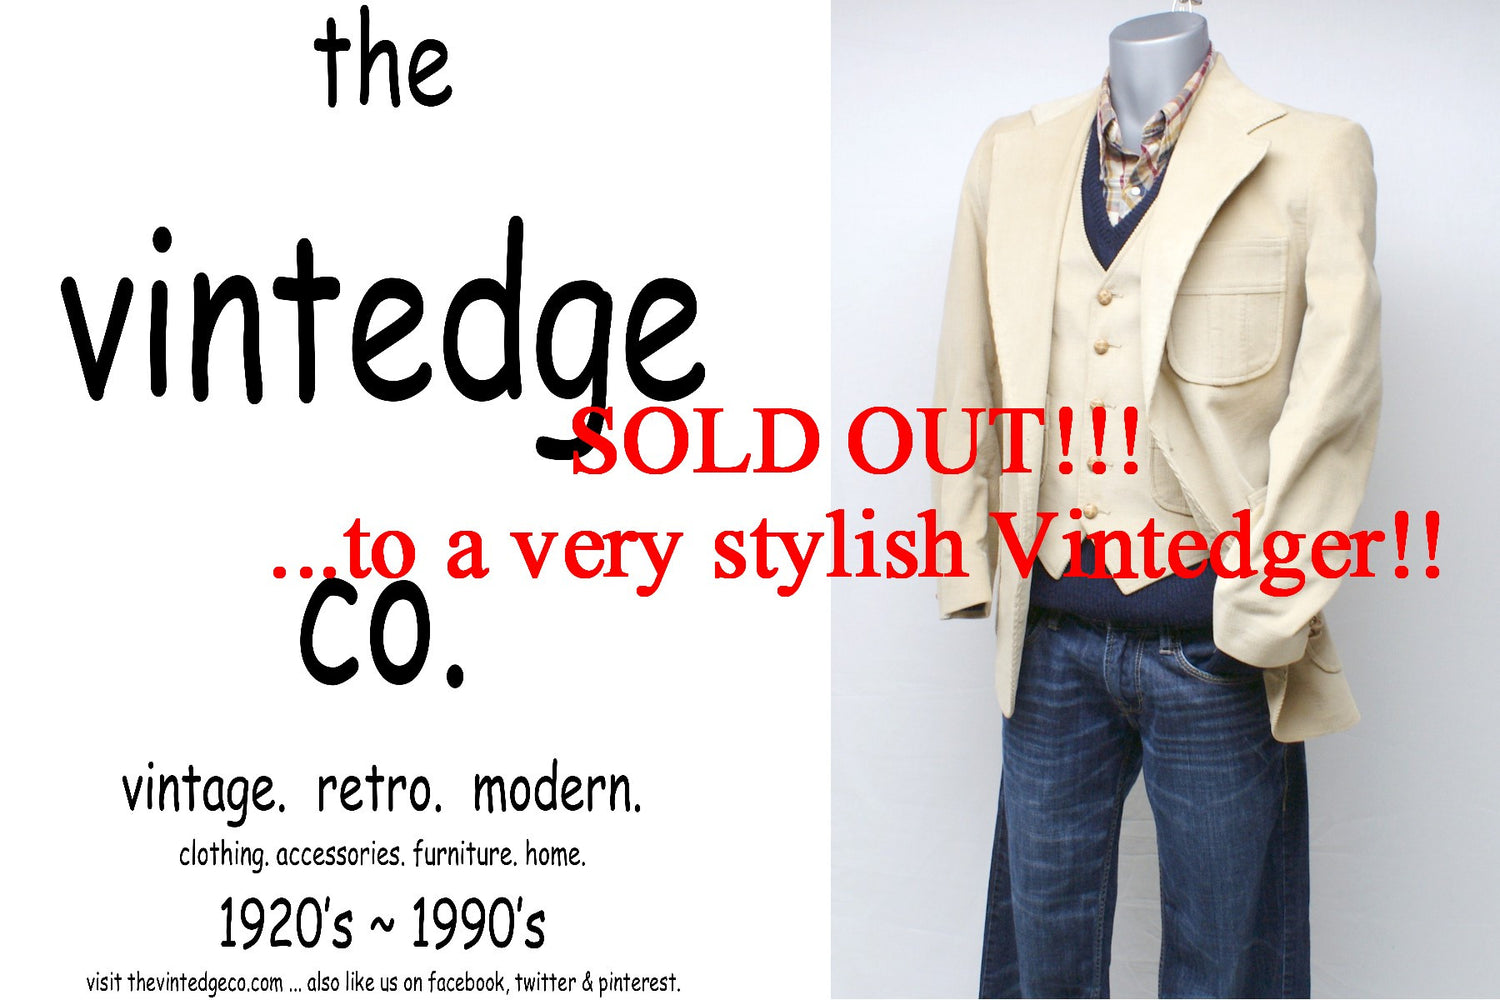 SOLD - Vintage Corduroy Sportcoat Vest The Vintedge Co.